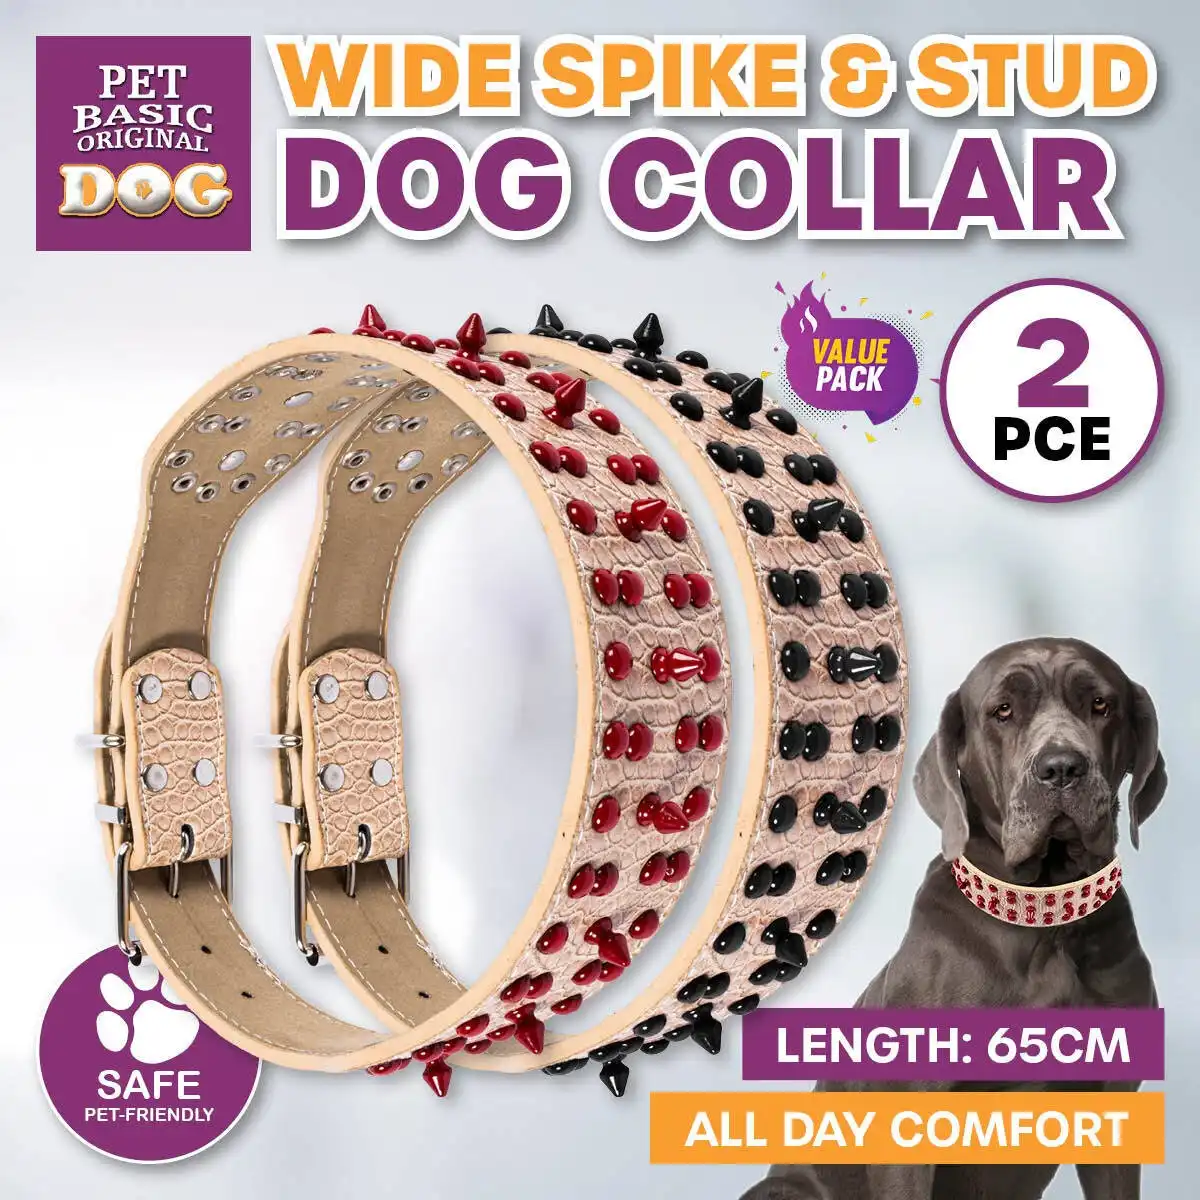 Pet Basic® 2PCE Dog Collar Wide Spike & Stud Design Premium Quality 64cm